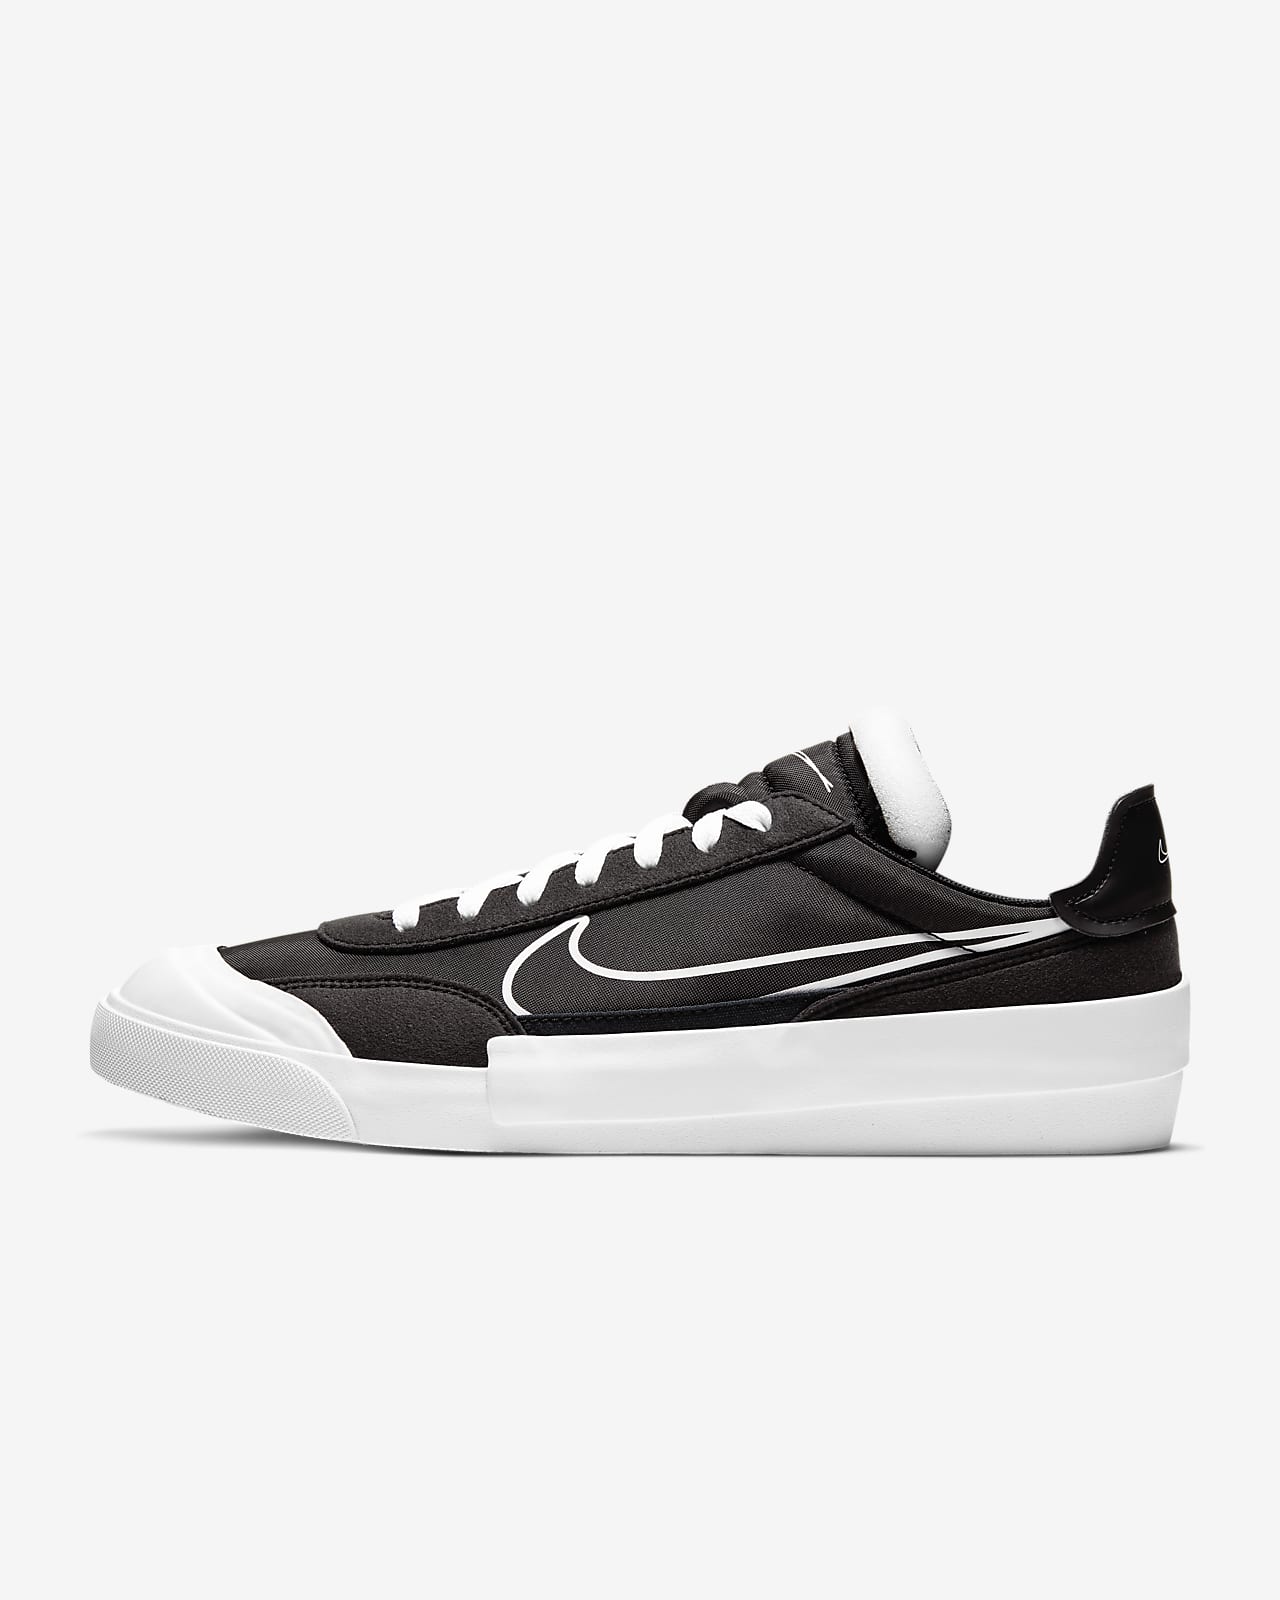 Nike Drop-Type Shoe. Nike LU